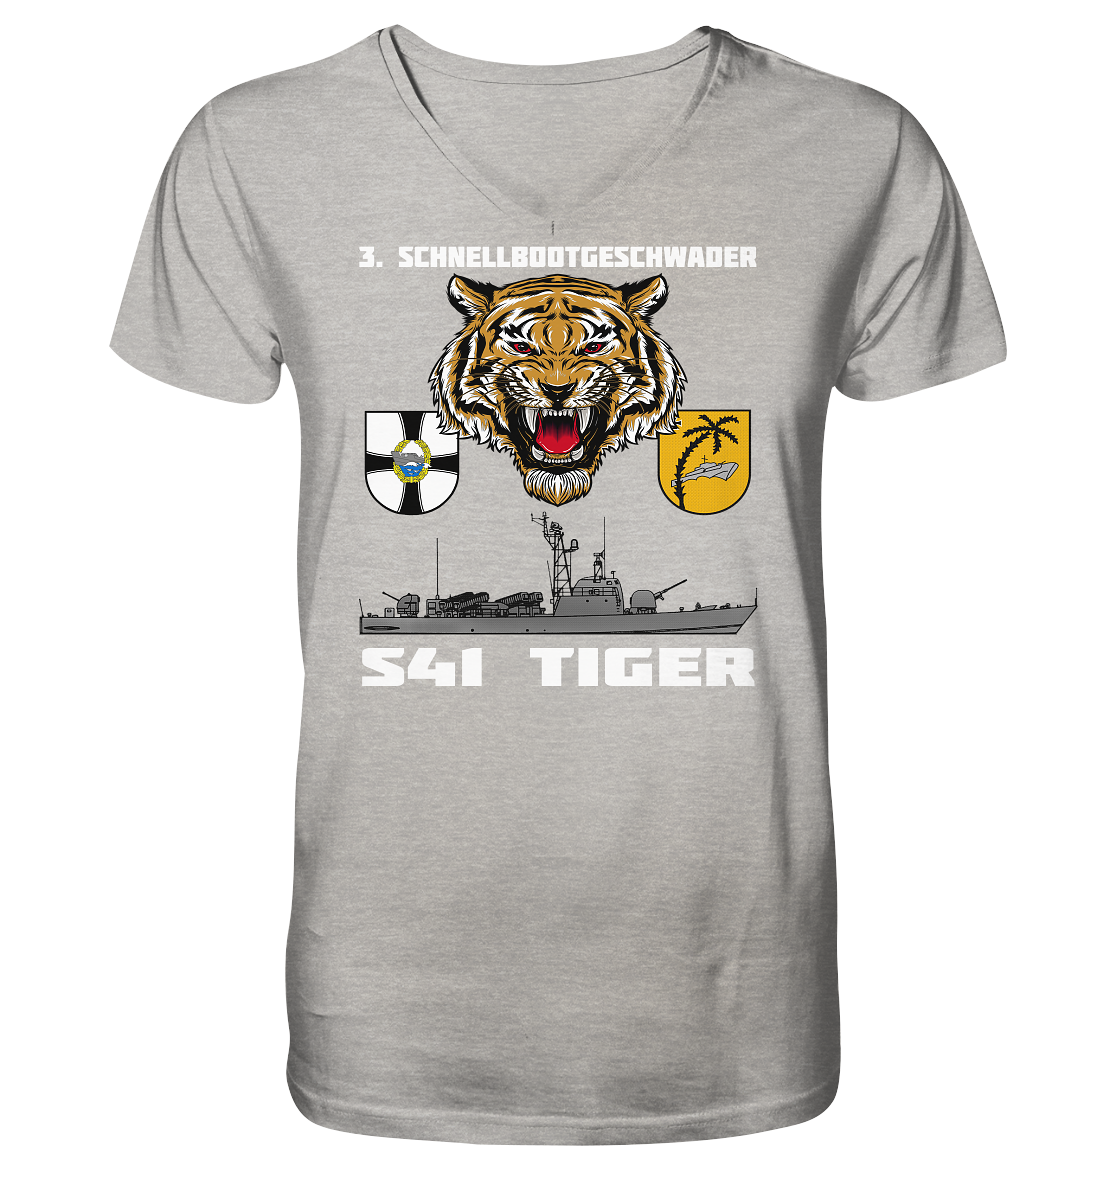 S41 TIGER - Mens Organic V-Neck Shirt